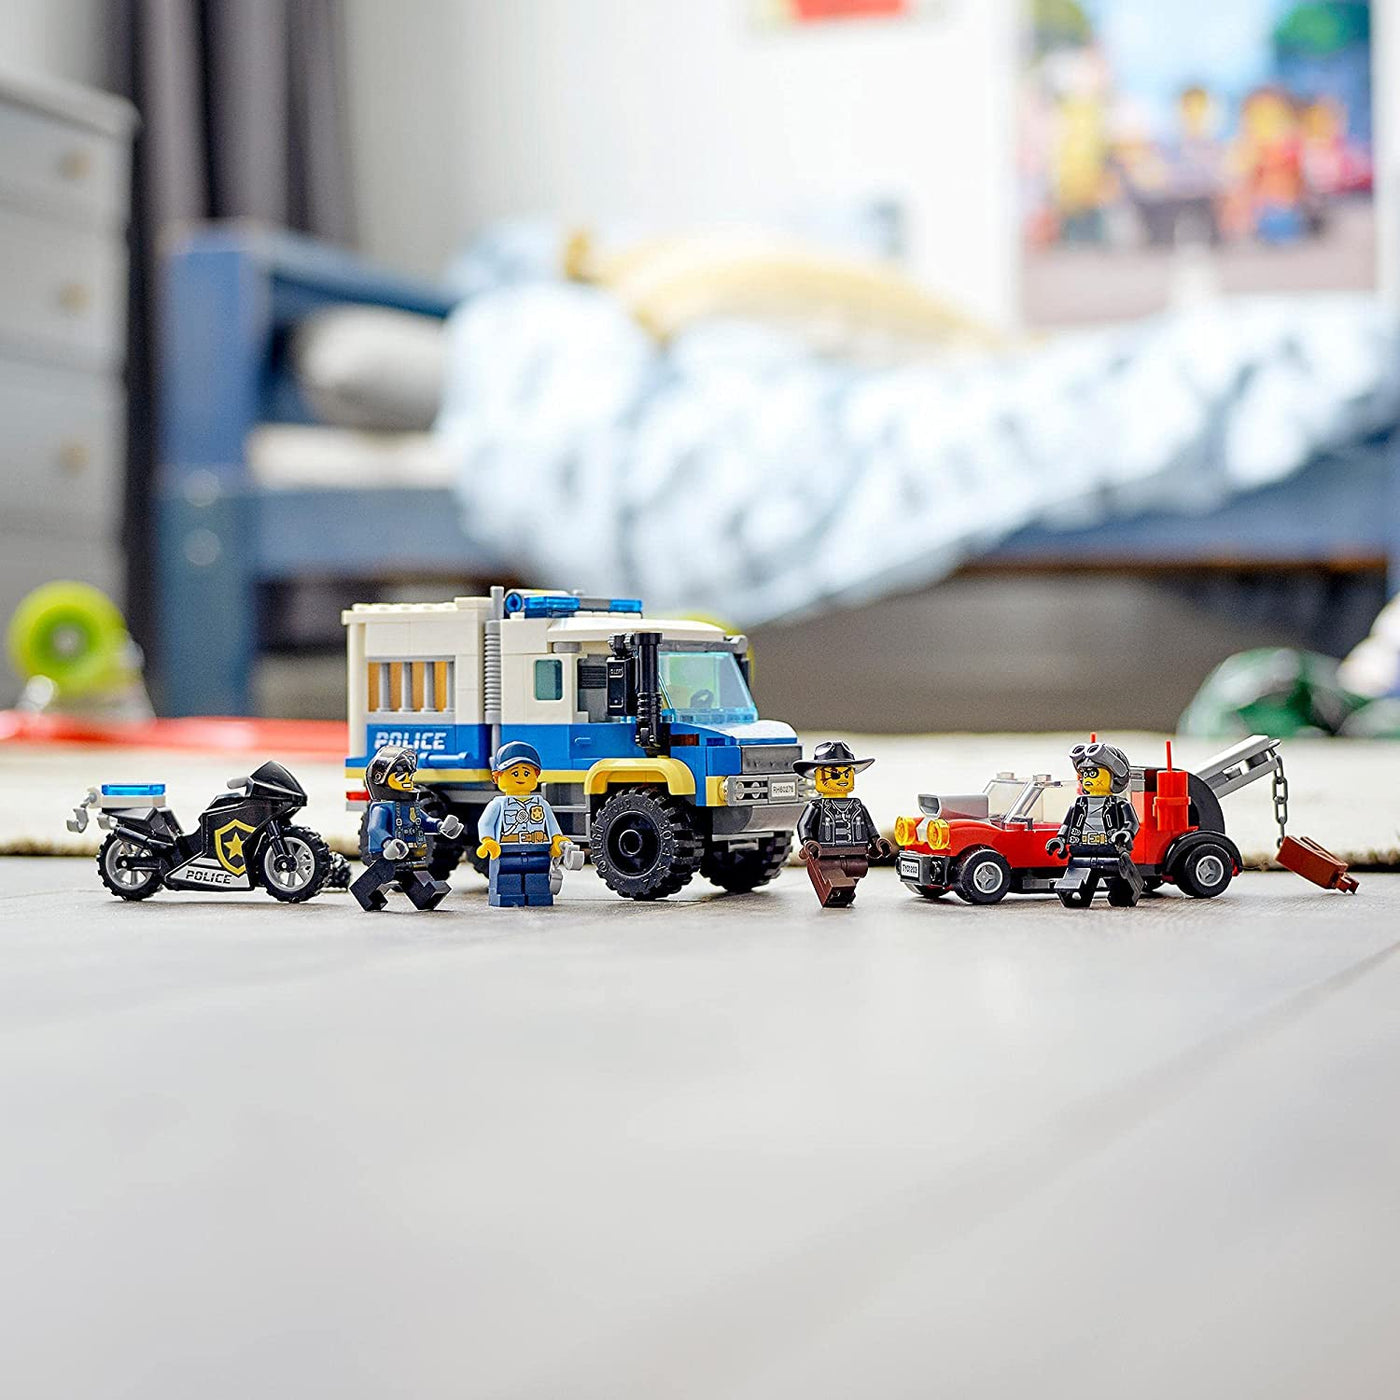 LEGO City # 60276 - Police Prisoner Transport